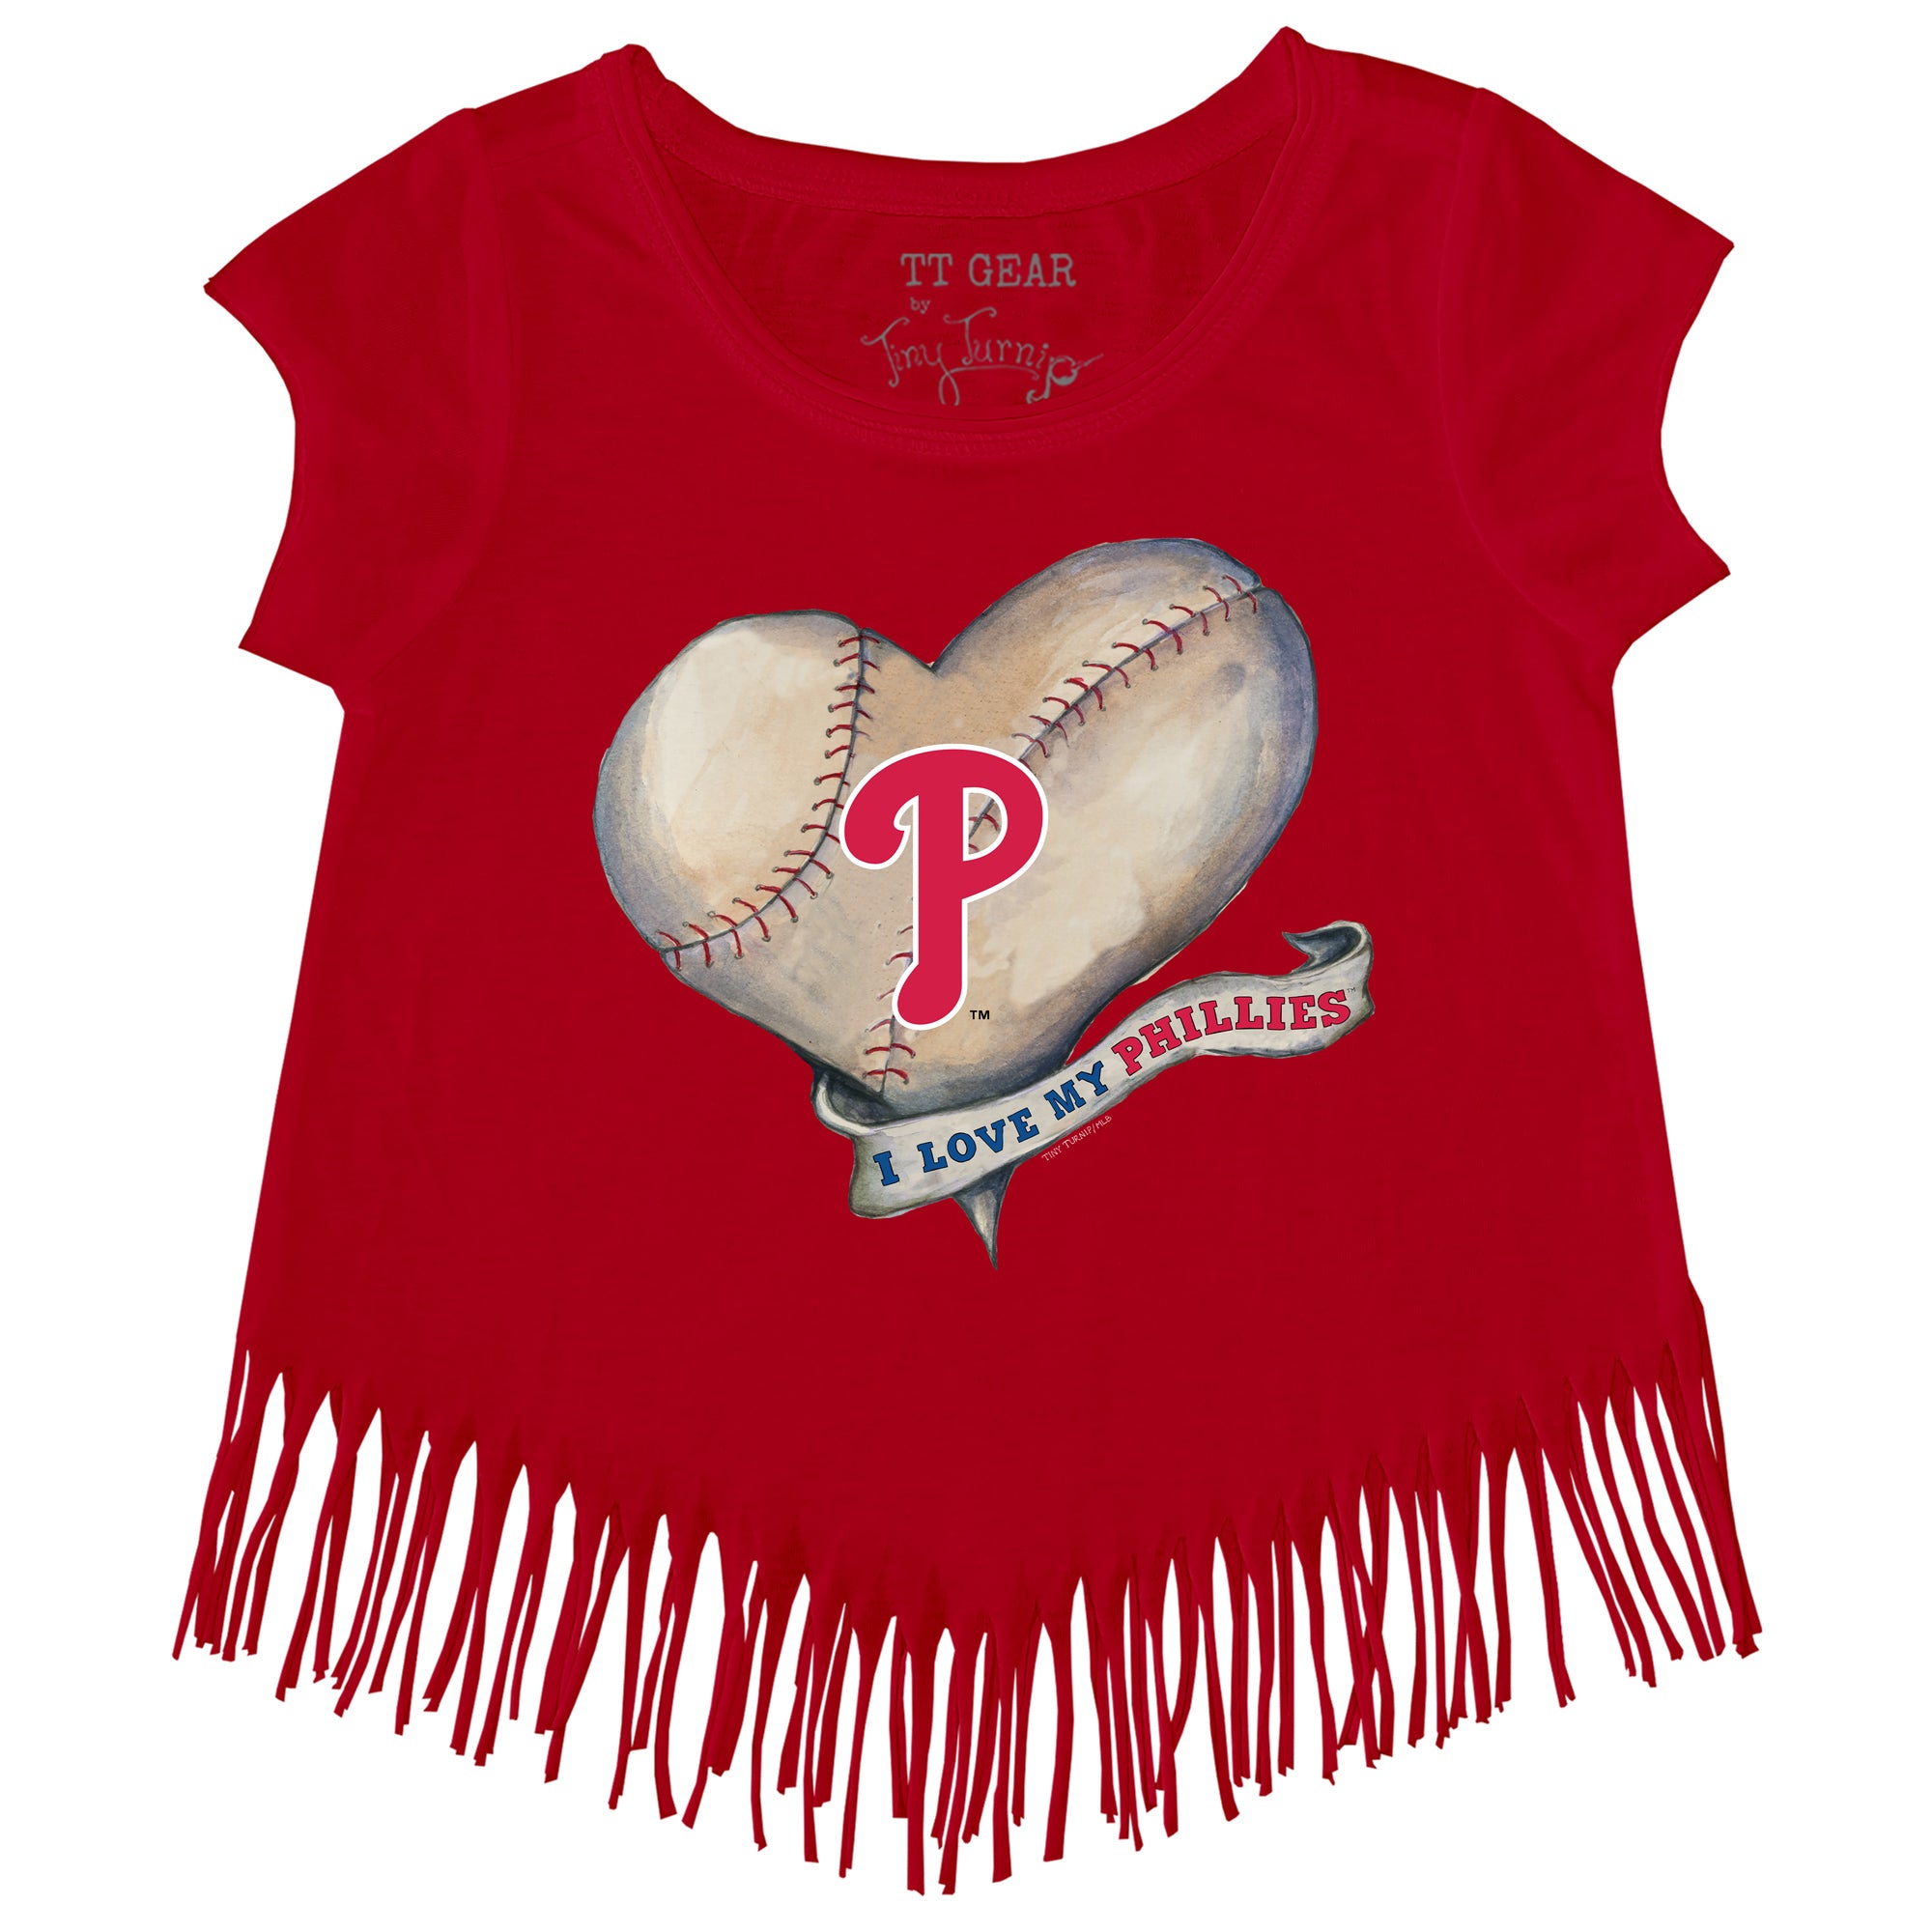 Tiny Turnip Philadelphia Phillies Stitched Baseball Tee Shirt Youth Large (10-12) / Red